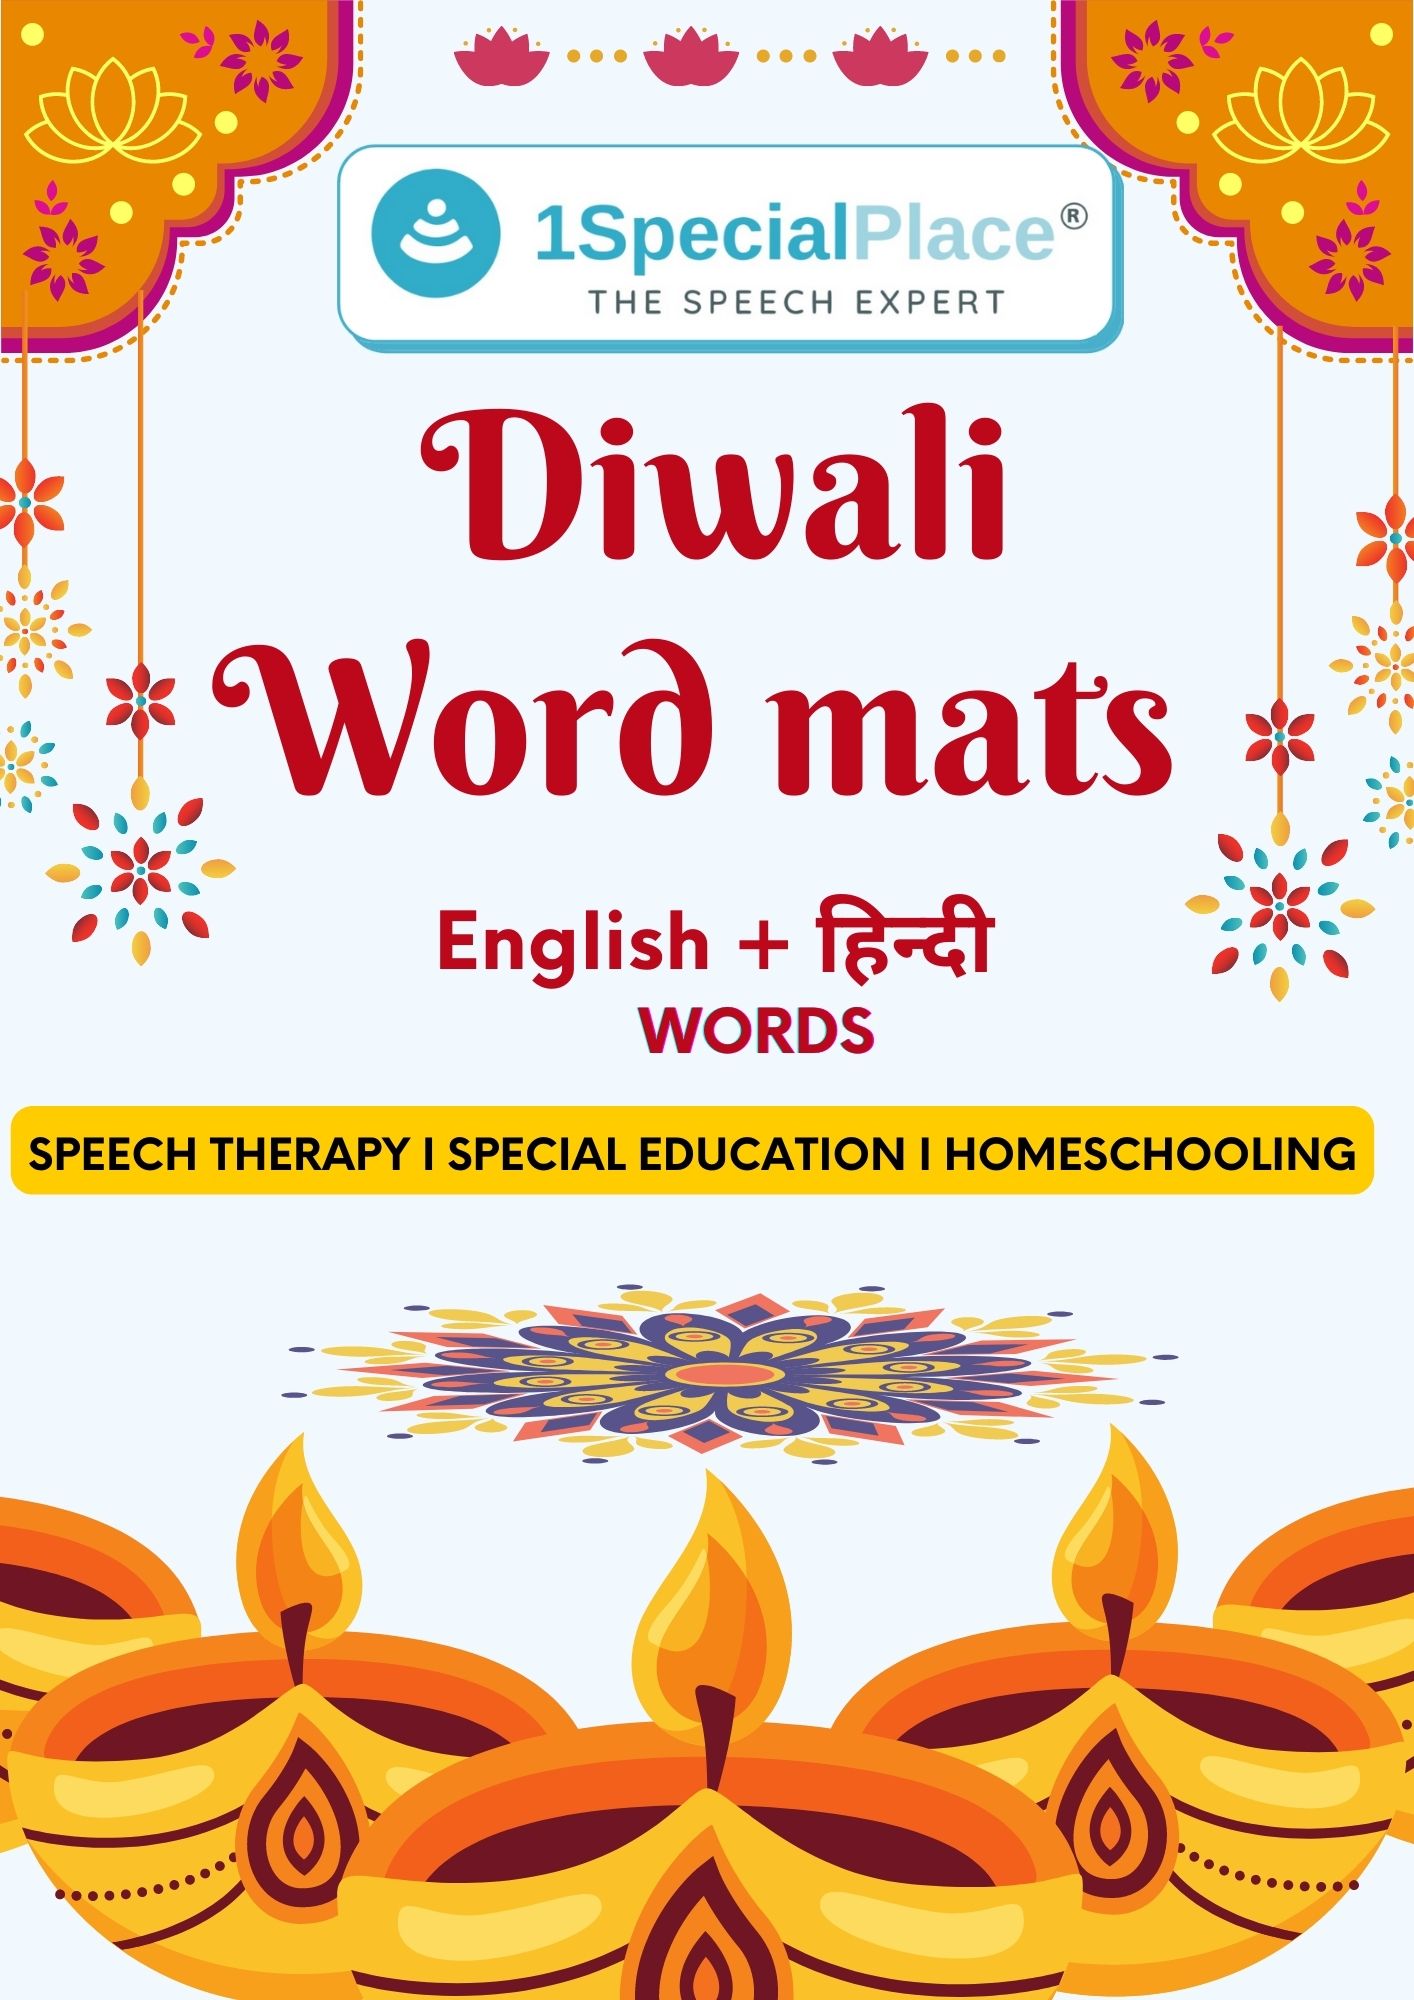 Diwali word mats